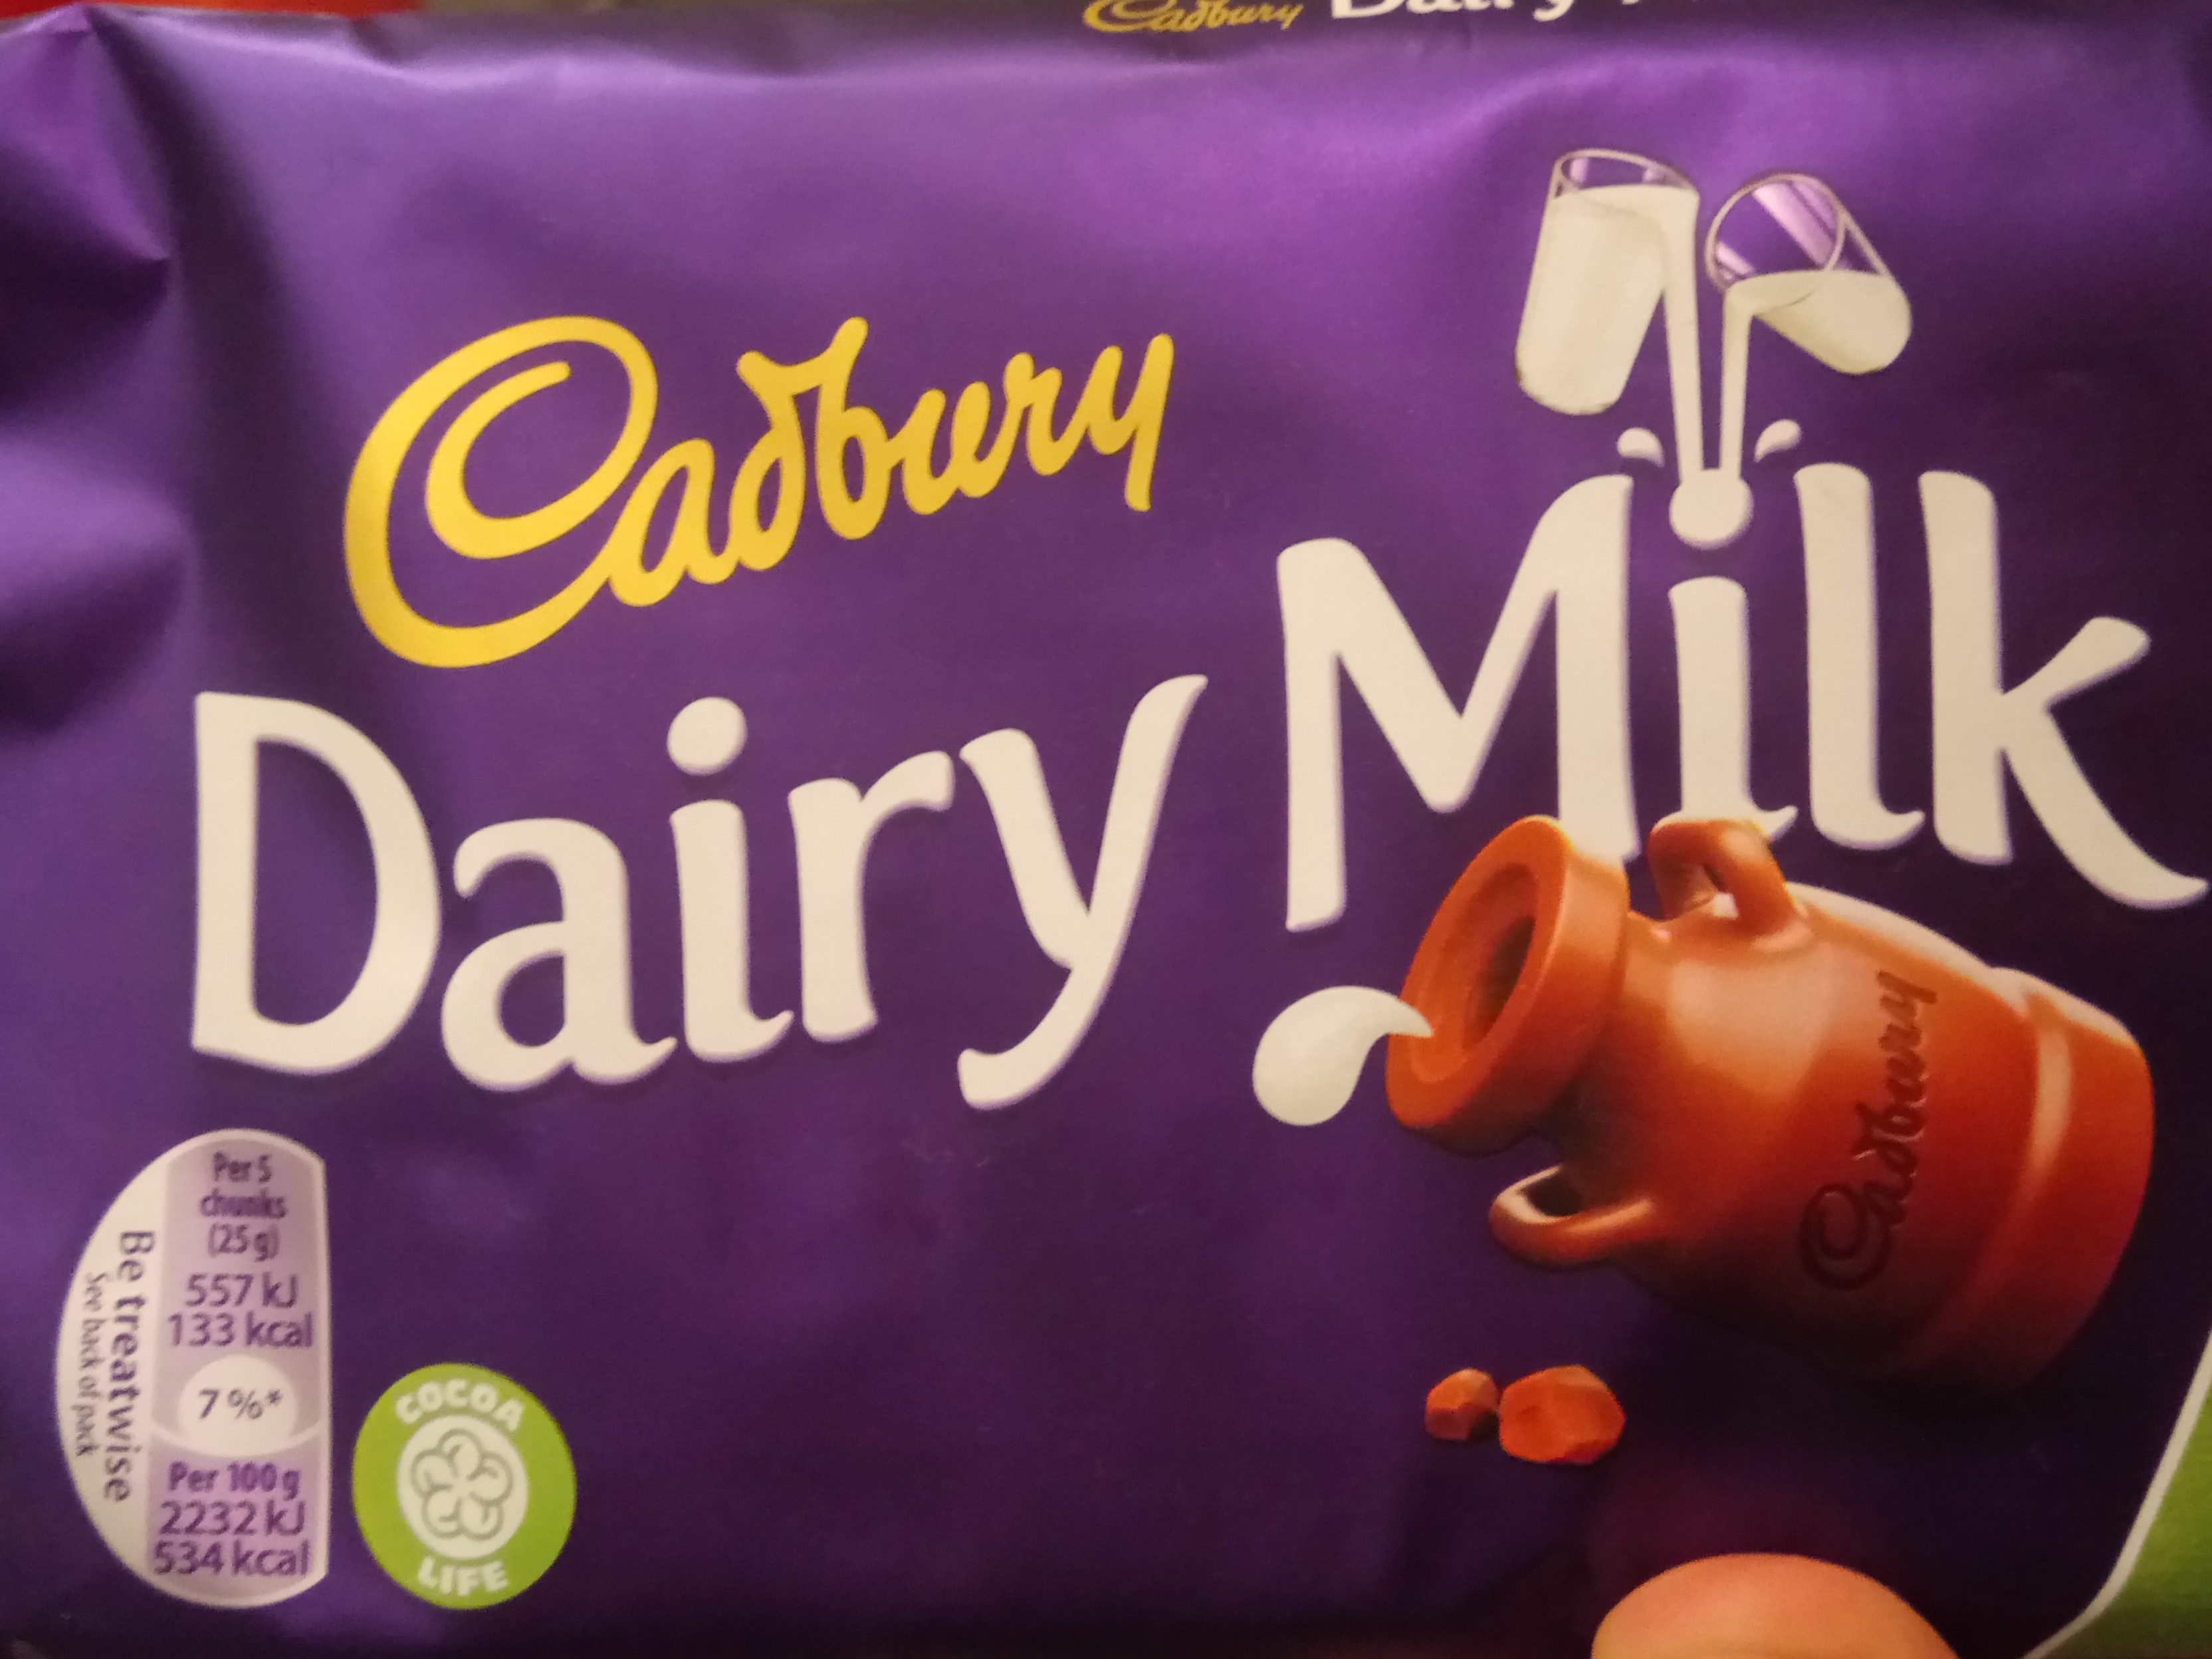 Dairy milk chocolate bar - Product - en